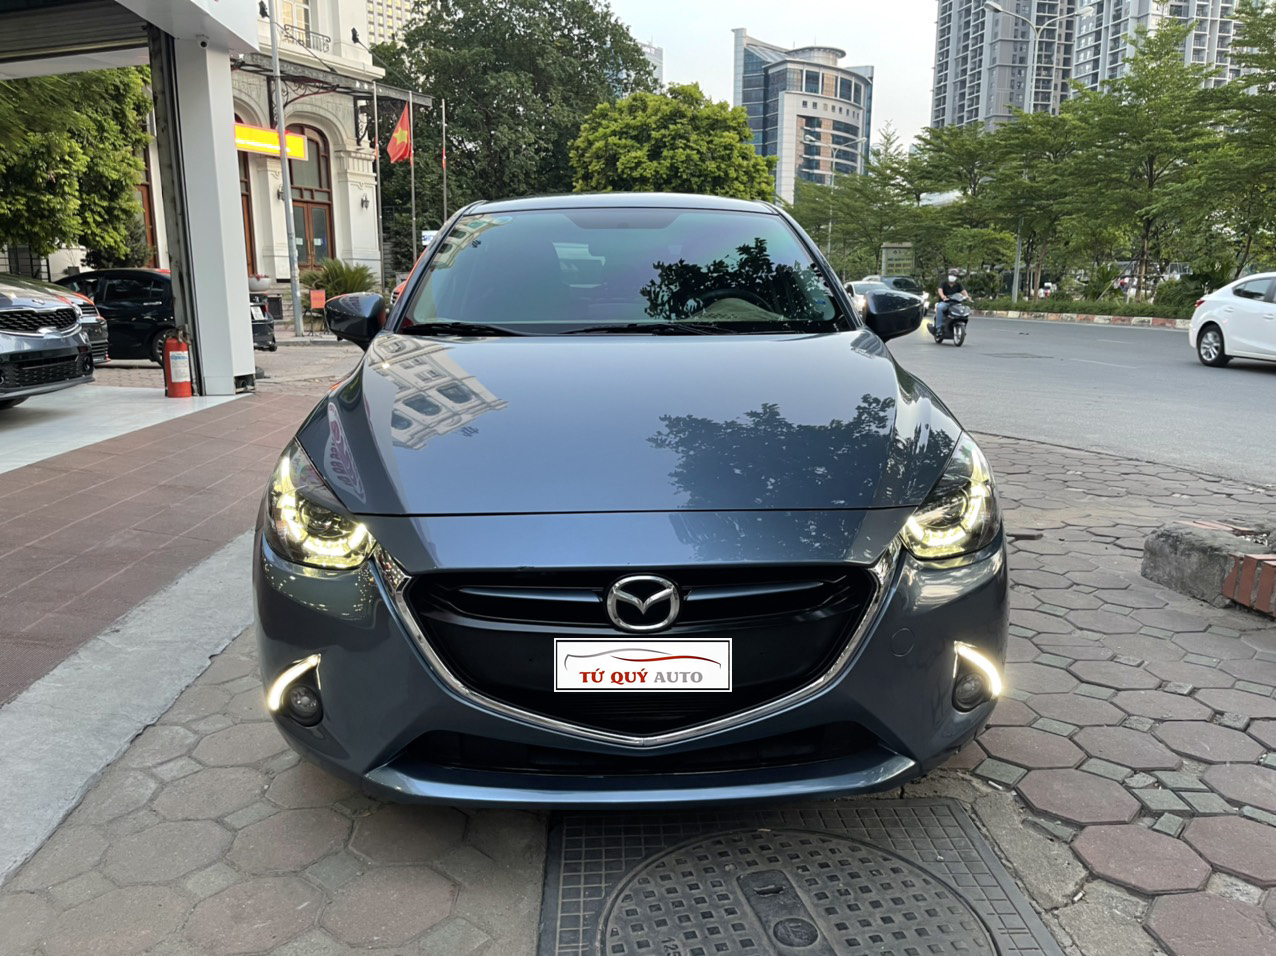 Mazda2  Wikipedia